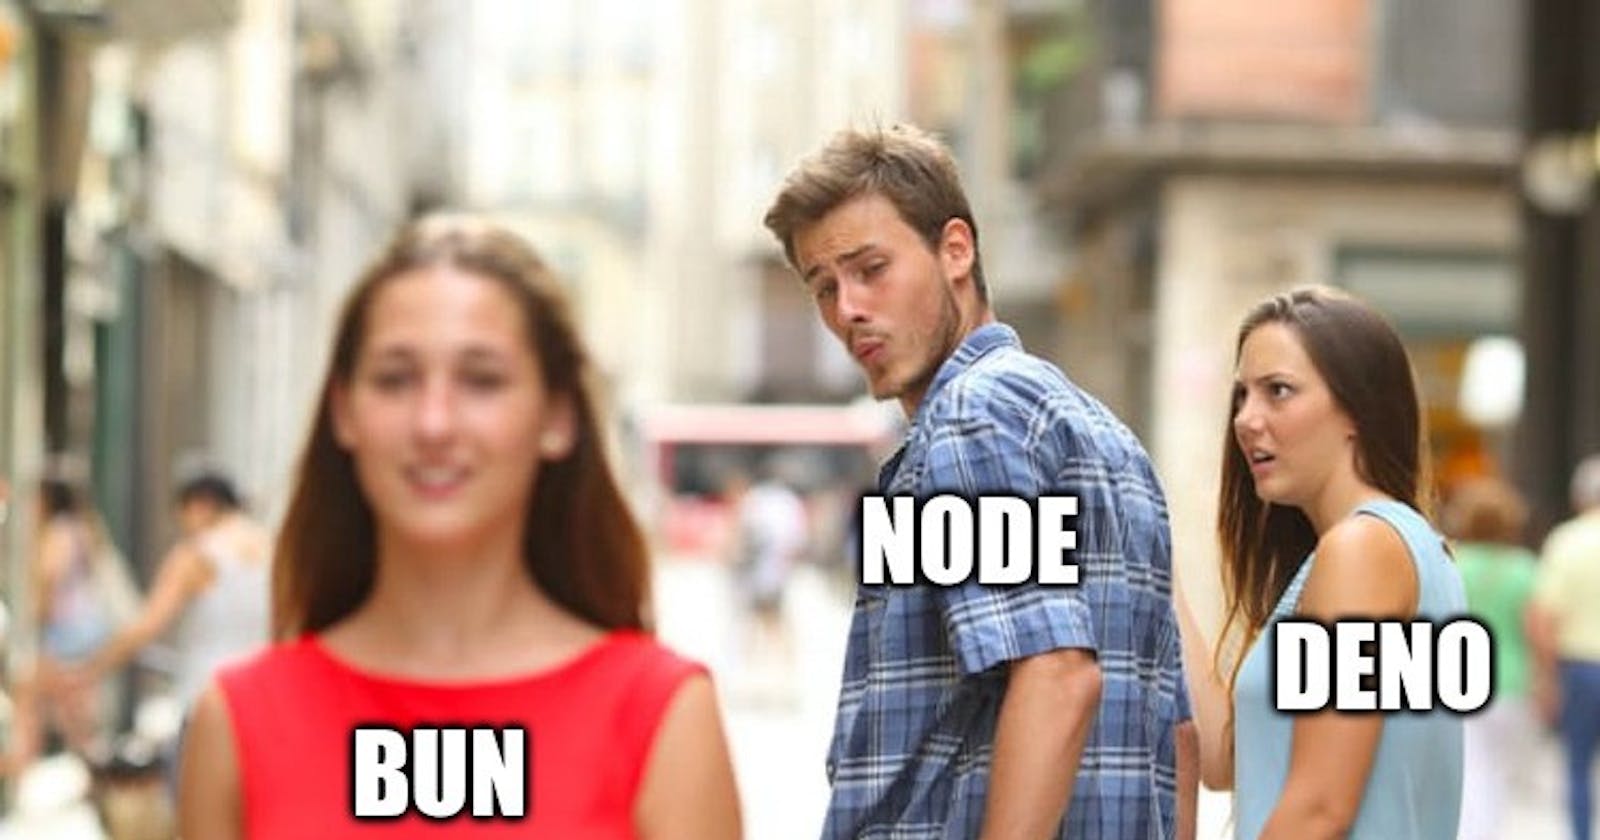 Bun: A brand-new, lightning-quick JavaScript runtime